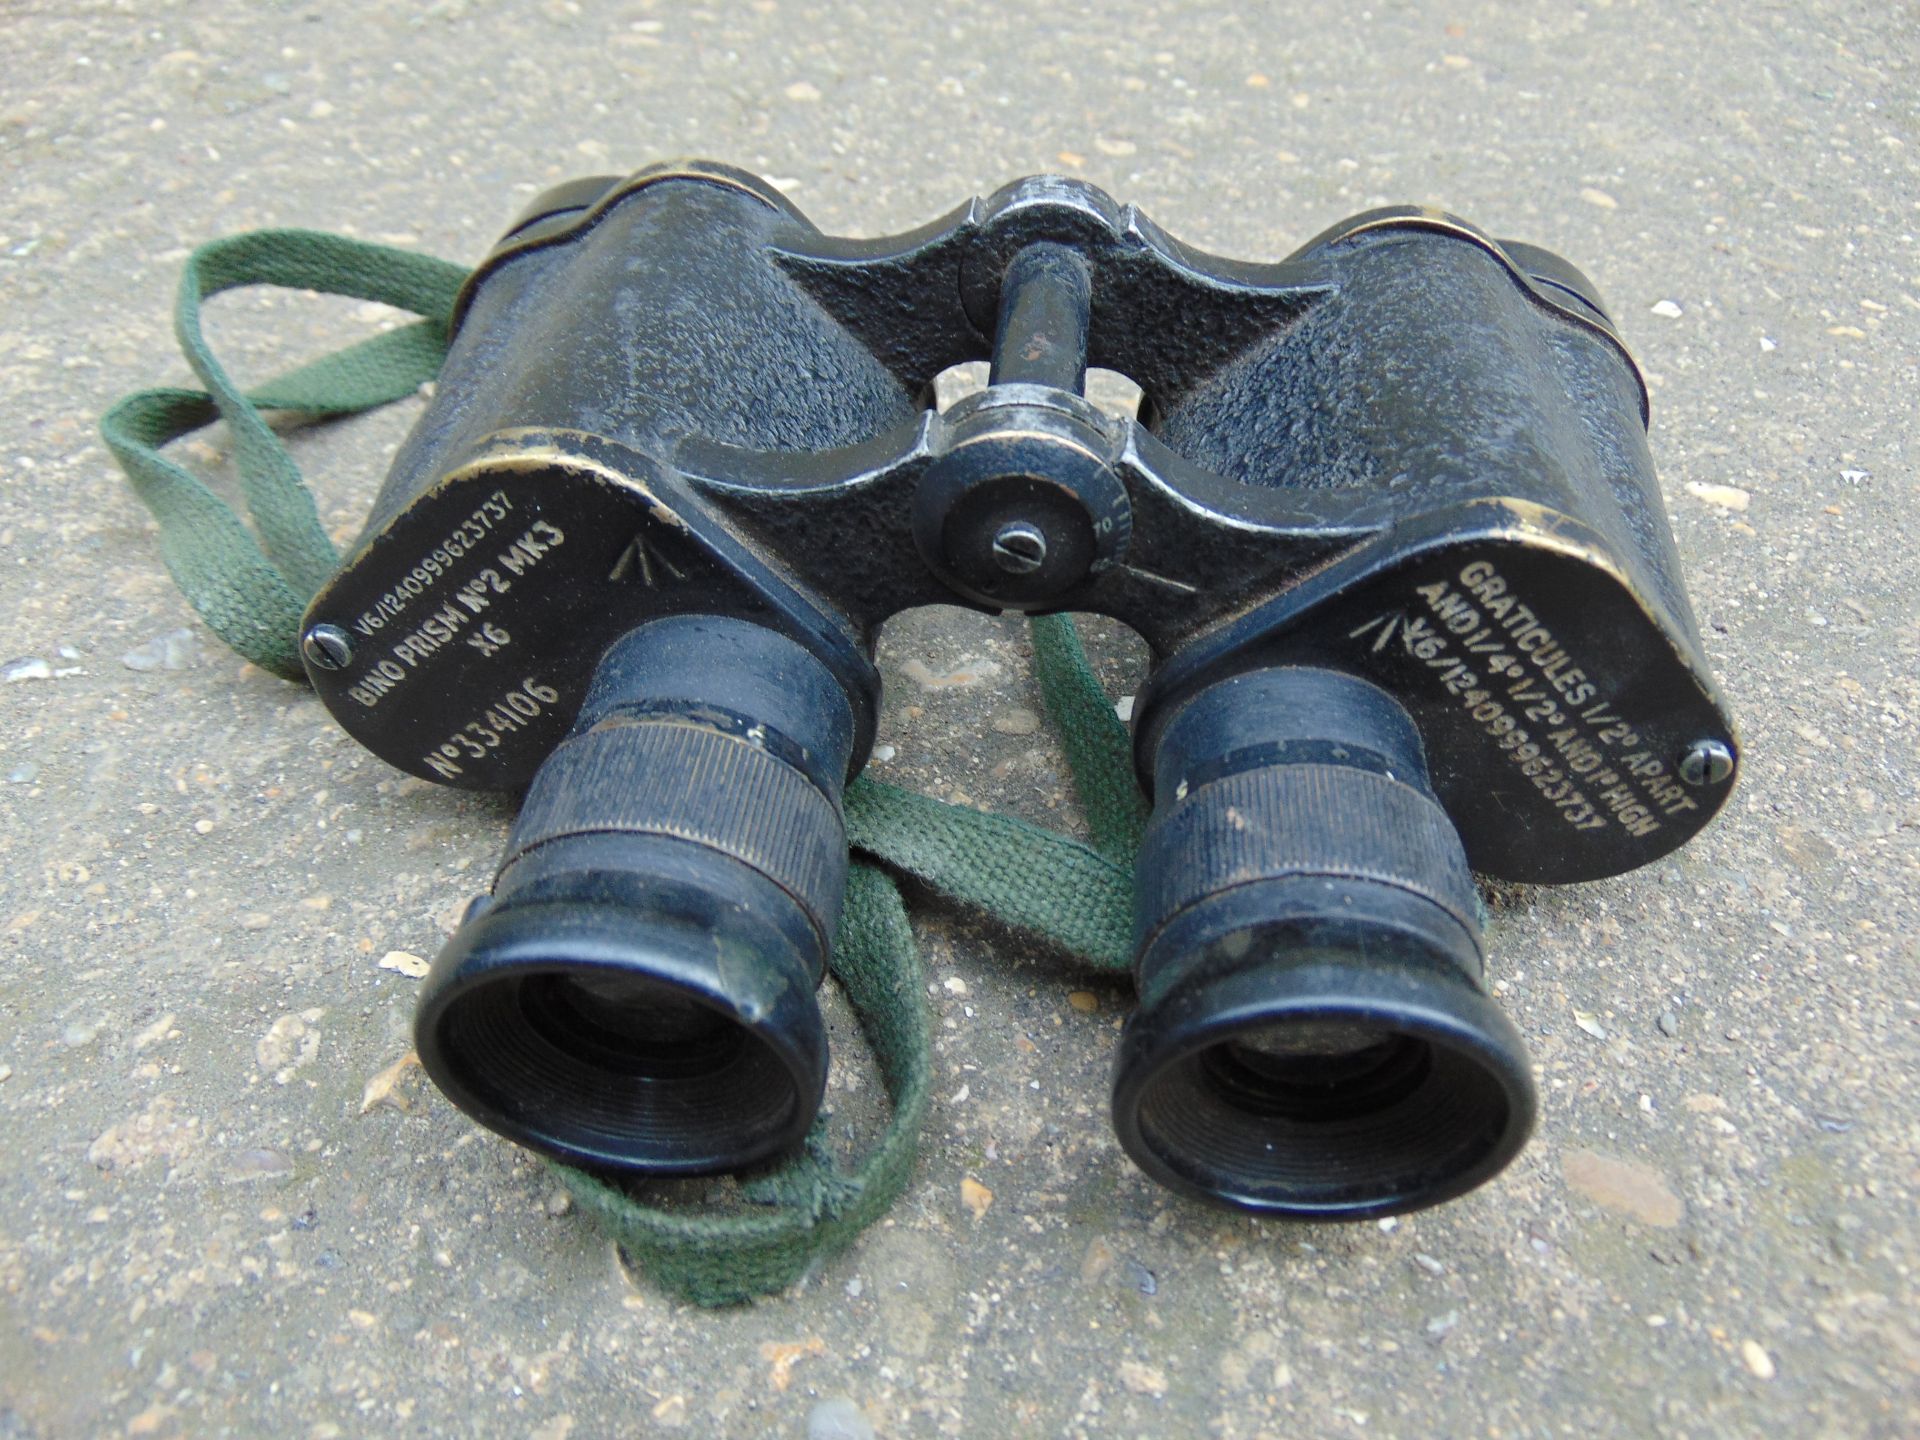 BINO PRISM No2 MK3 Binoculars intended for field use during World War 2 - Bild 3 aus 4